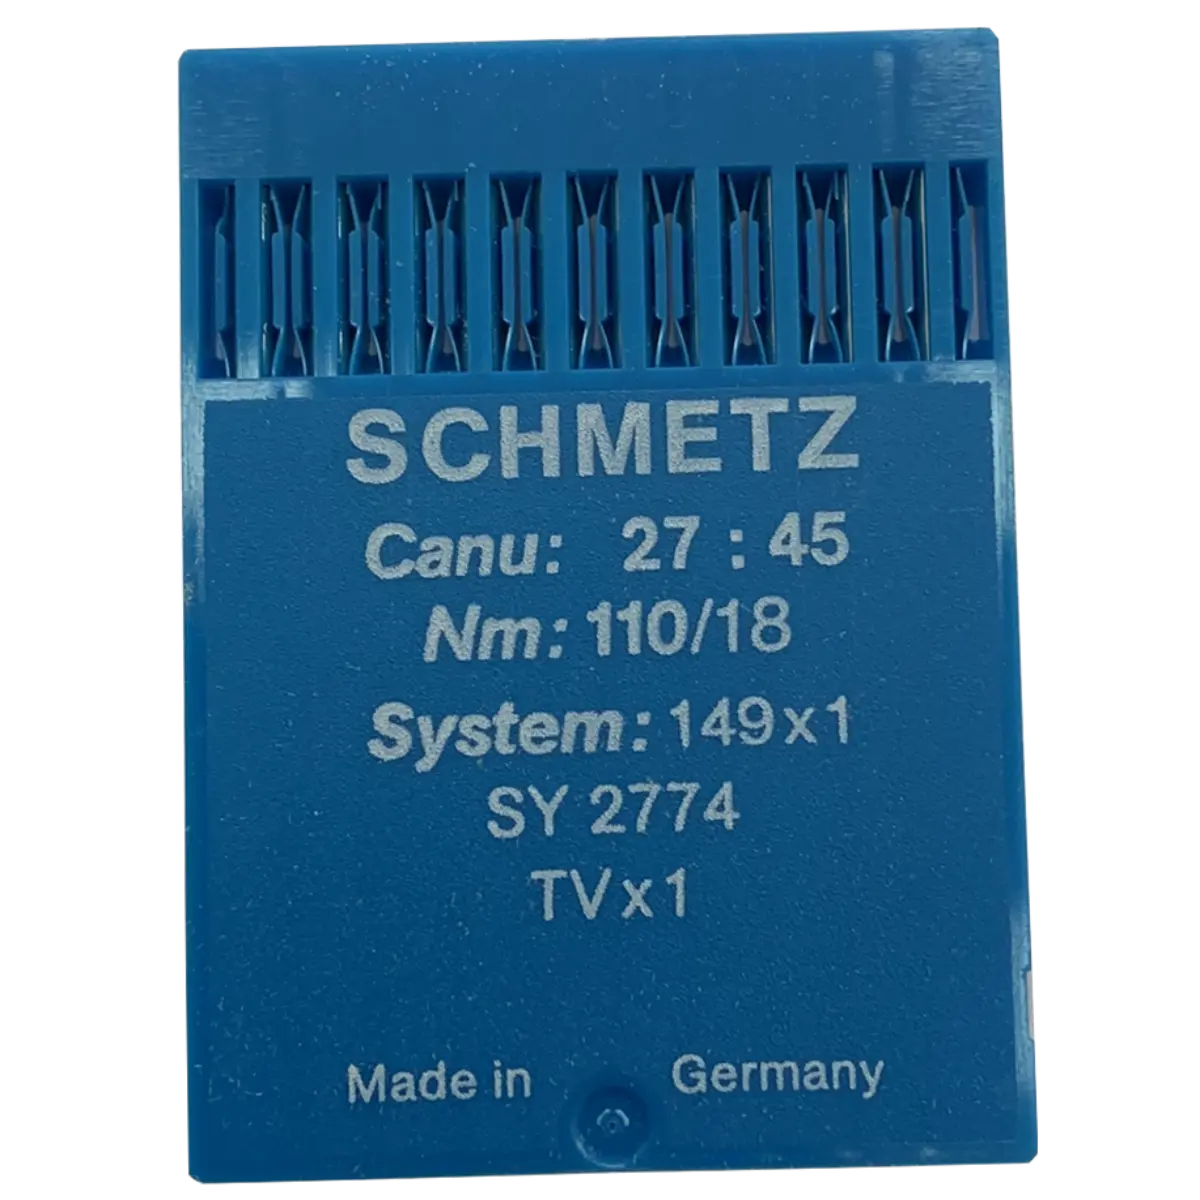 Schmetz Industrial Needles 149x1, SY 2774, TVx1, TV1, TV1R, Canu: 27 : 45